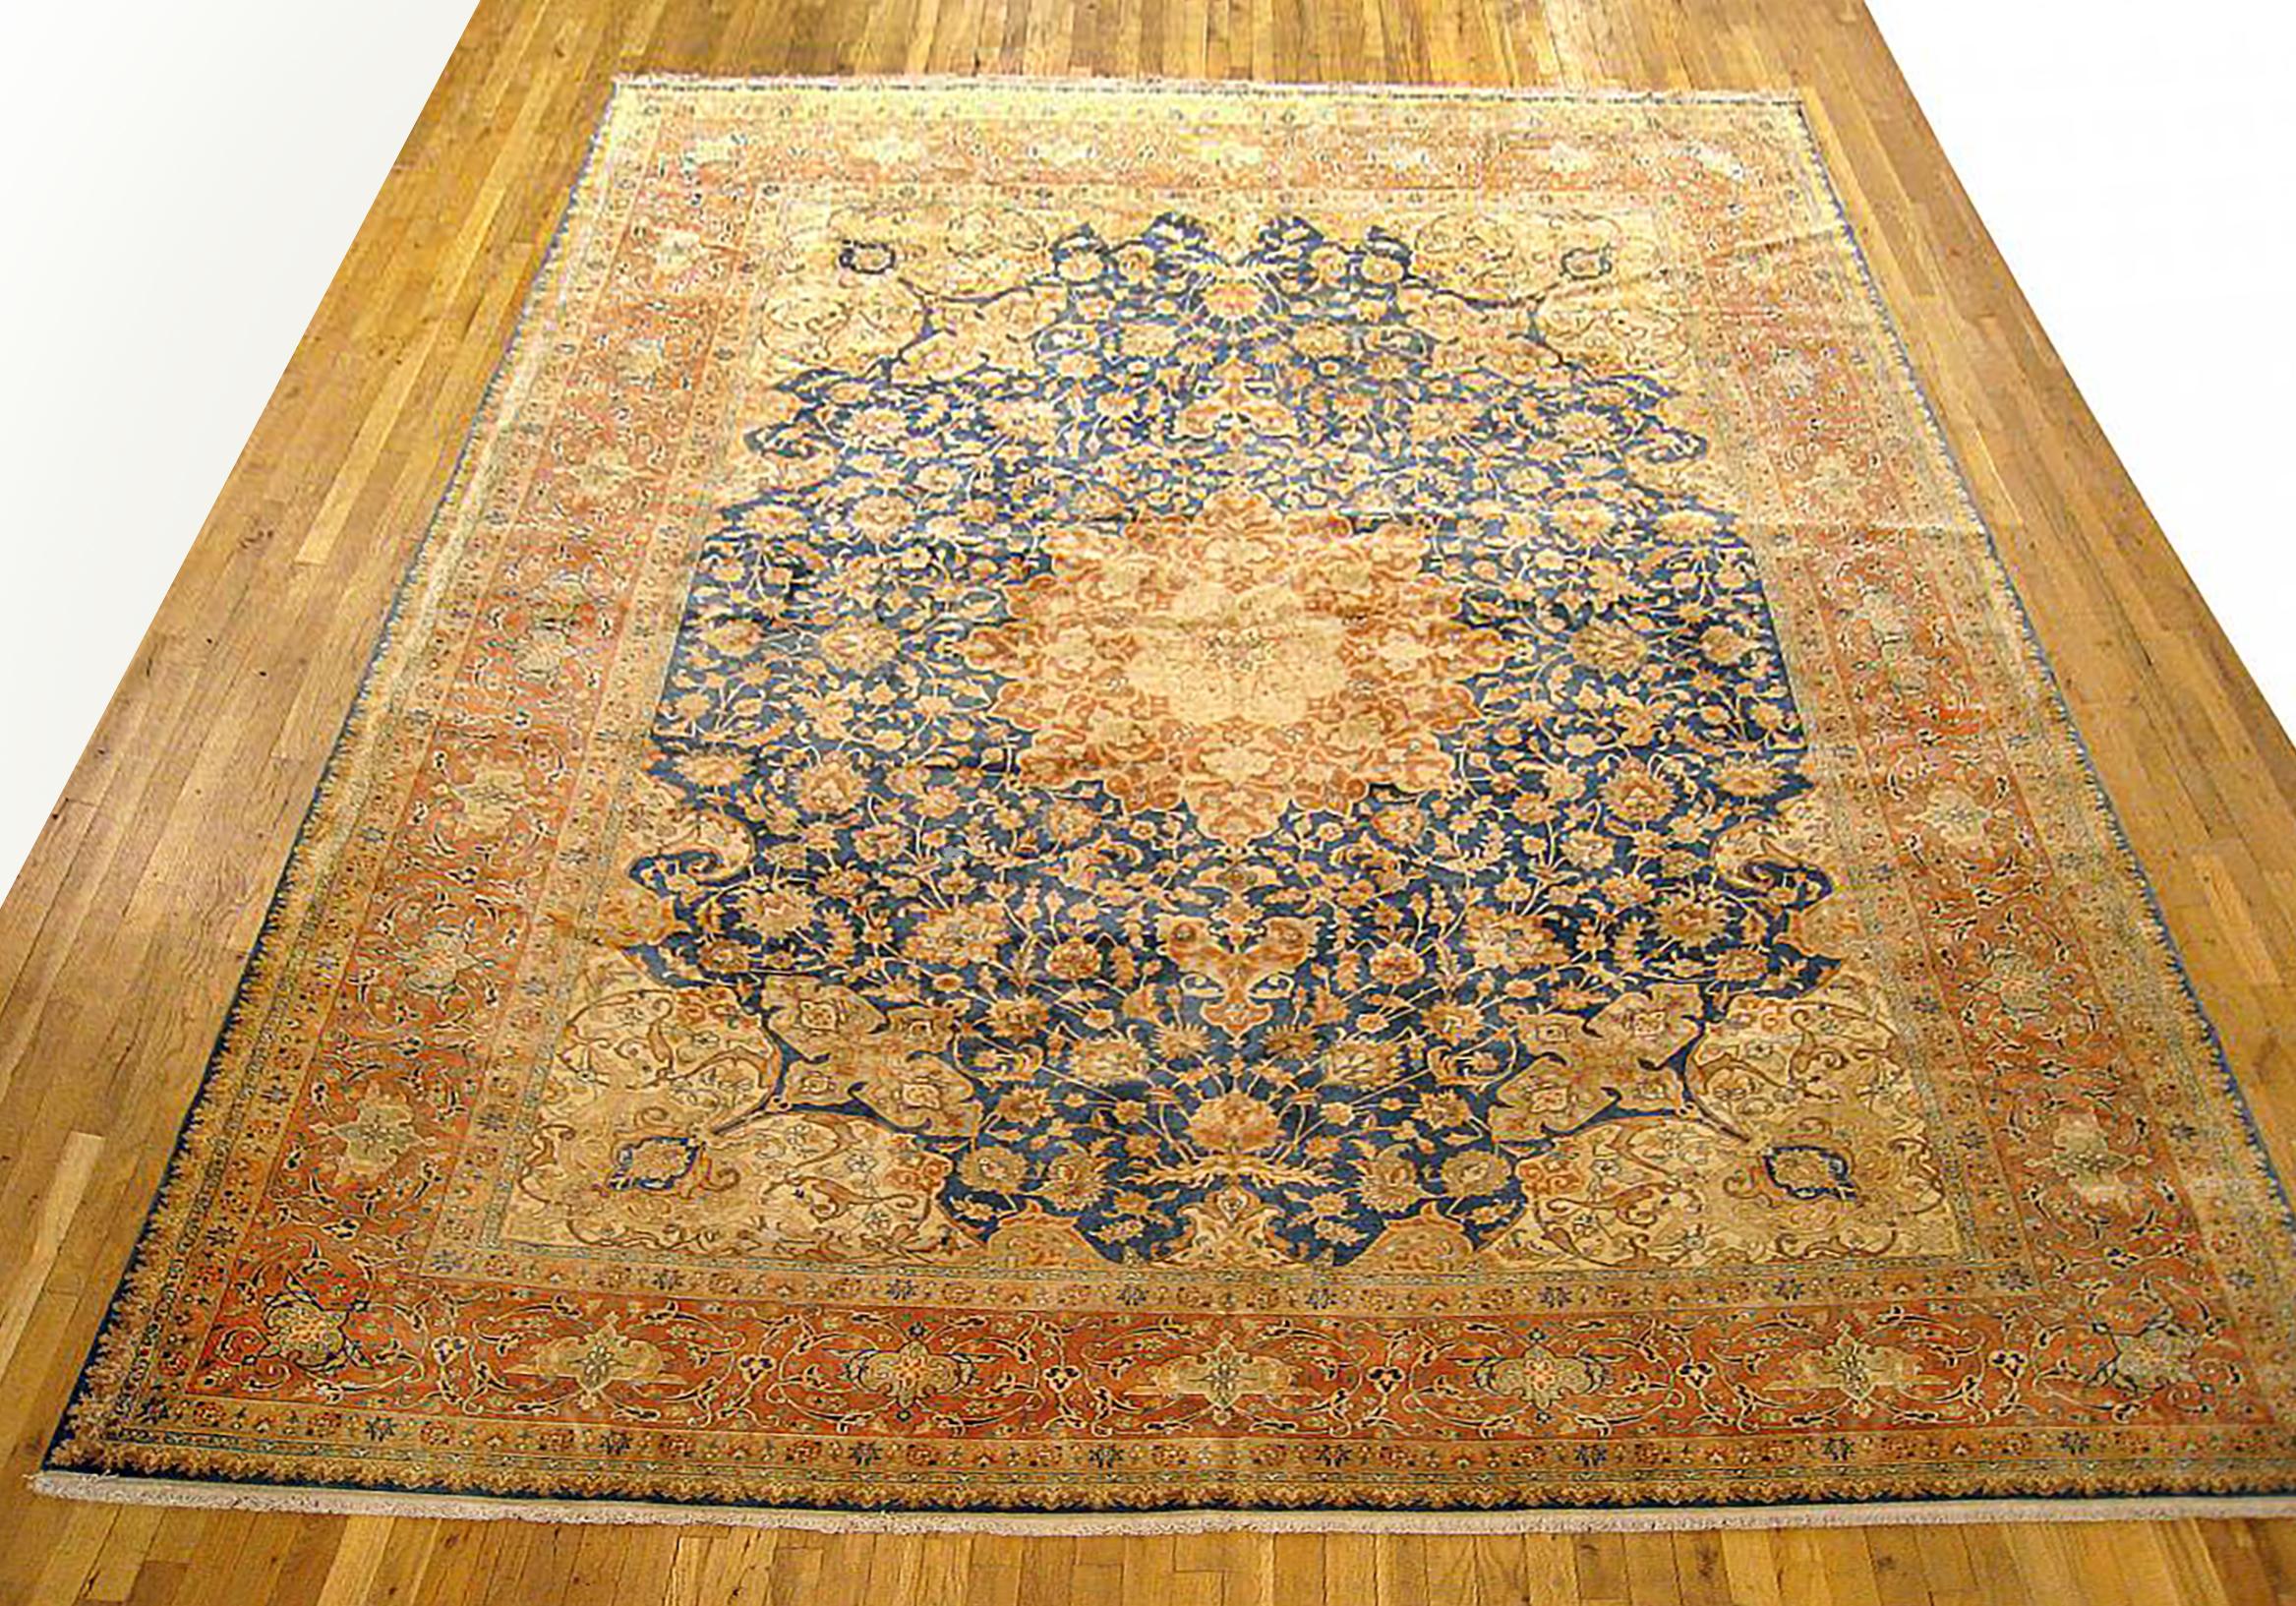 Vintage Perisan Tabriz  Oriental Carpet, circa 1940, Room Sized

A vintage Persian Tabriz oriental carpet, circa 1940. Size: 12'9